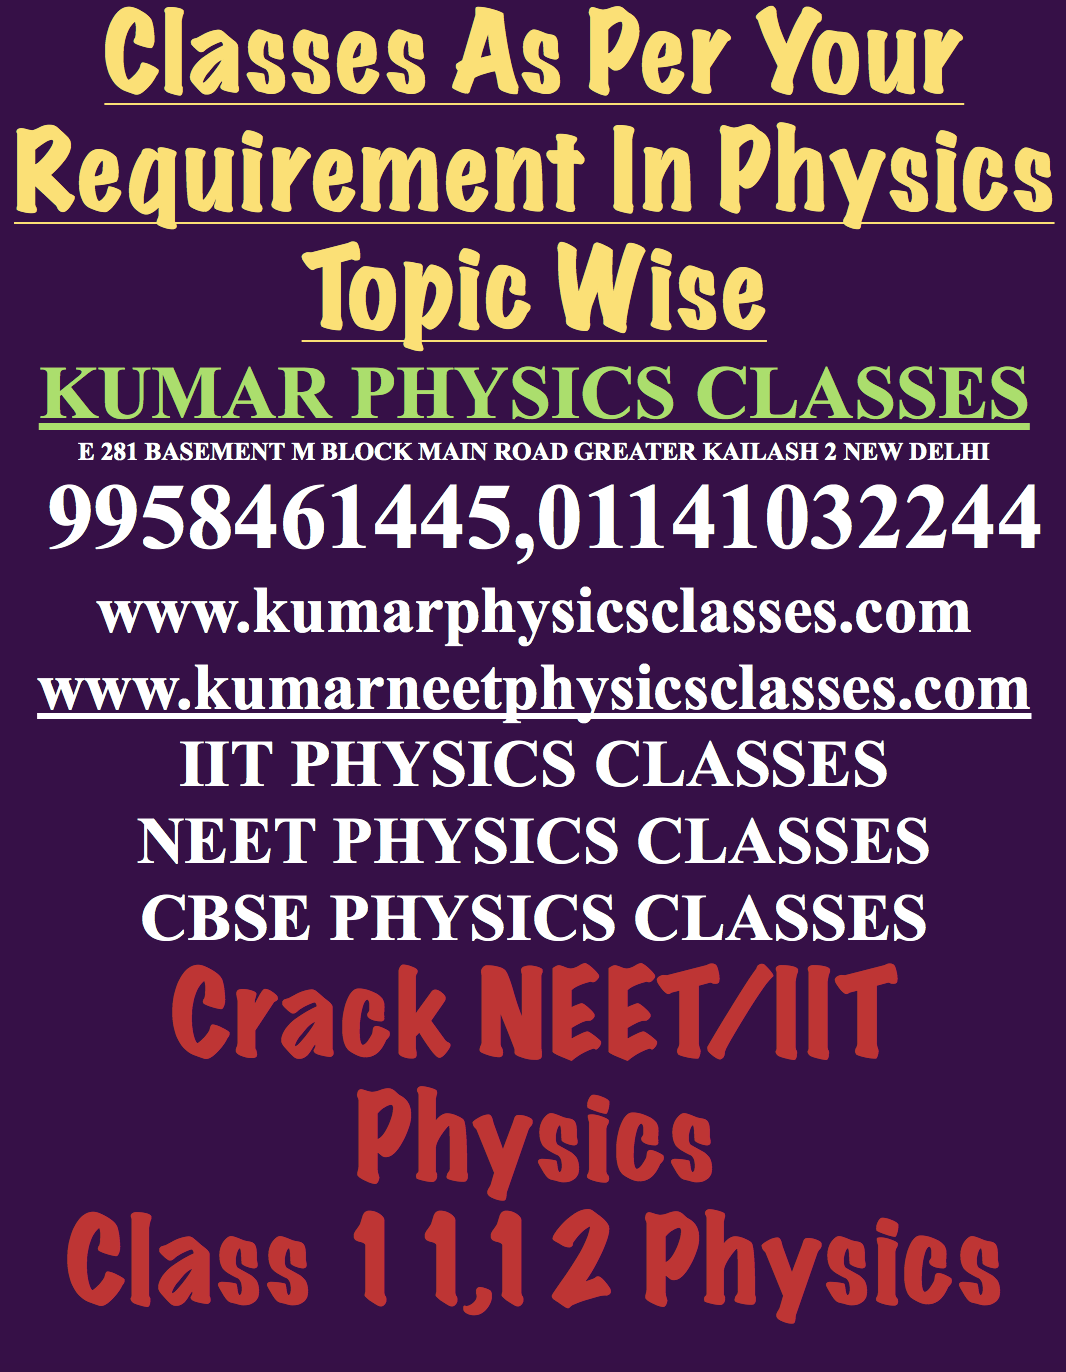 IIT PHYSICS CLASSES
NEET PHYSICS CLASSES
CBSE PHYSICS CLASSES
Crack NEET/IIT Physics